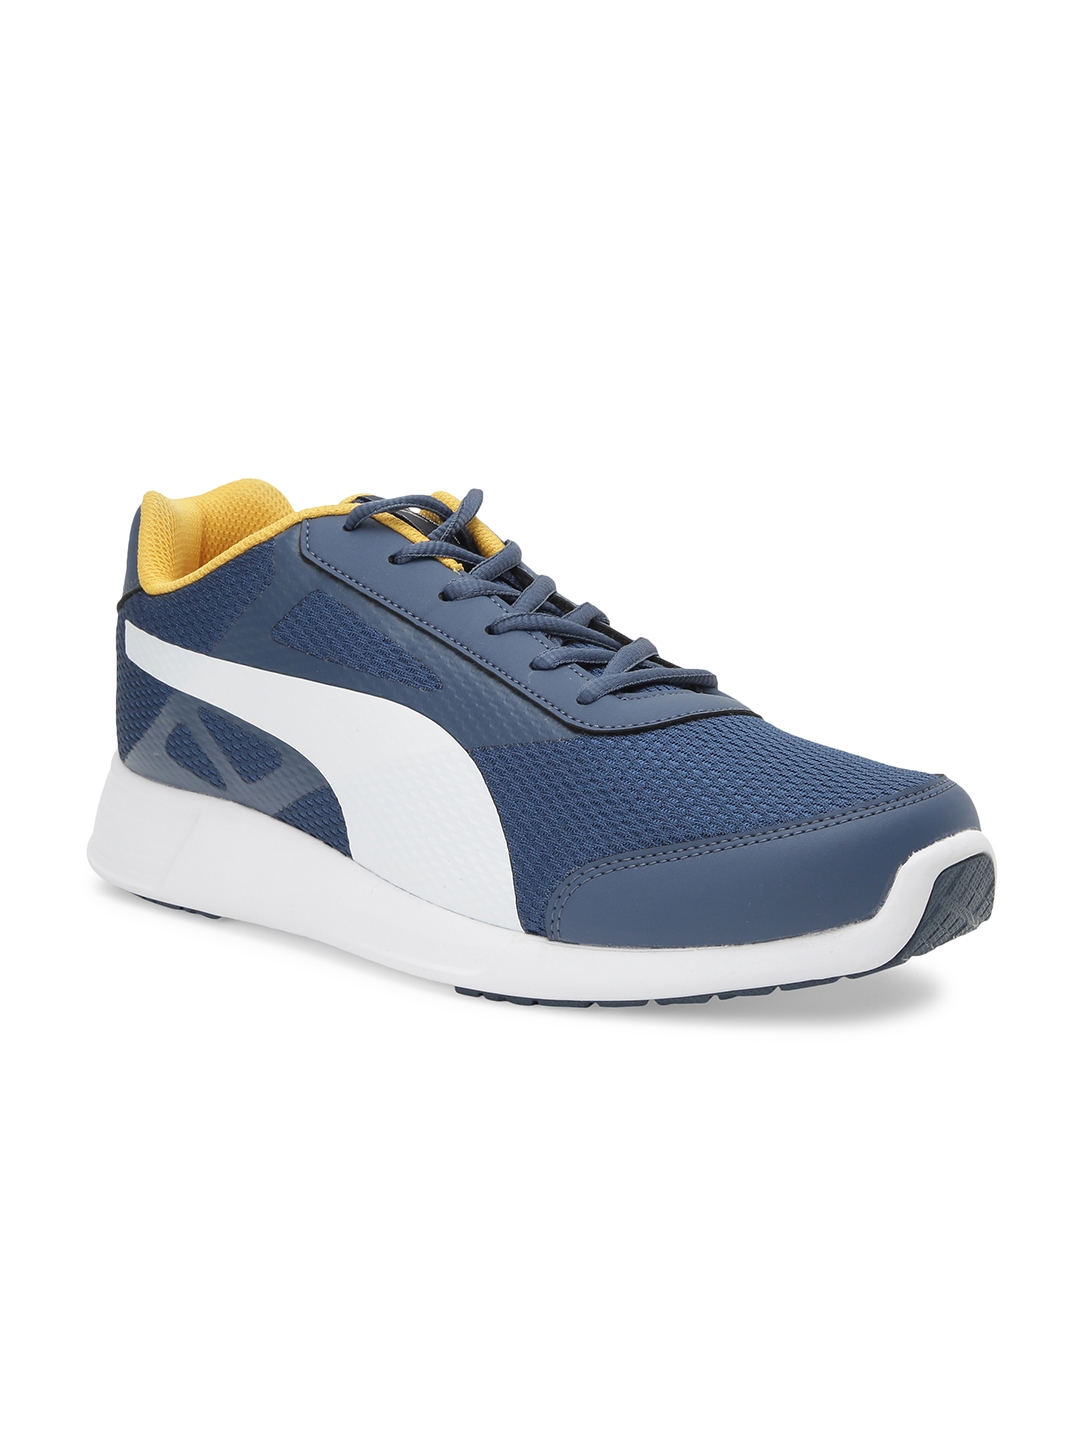 Puma Men Blue Sneakers